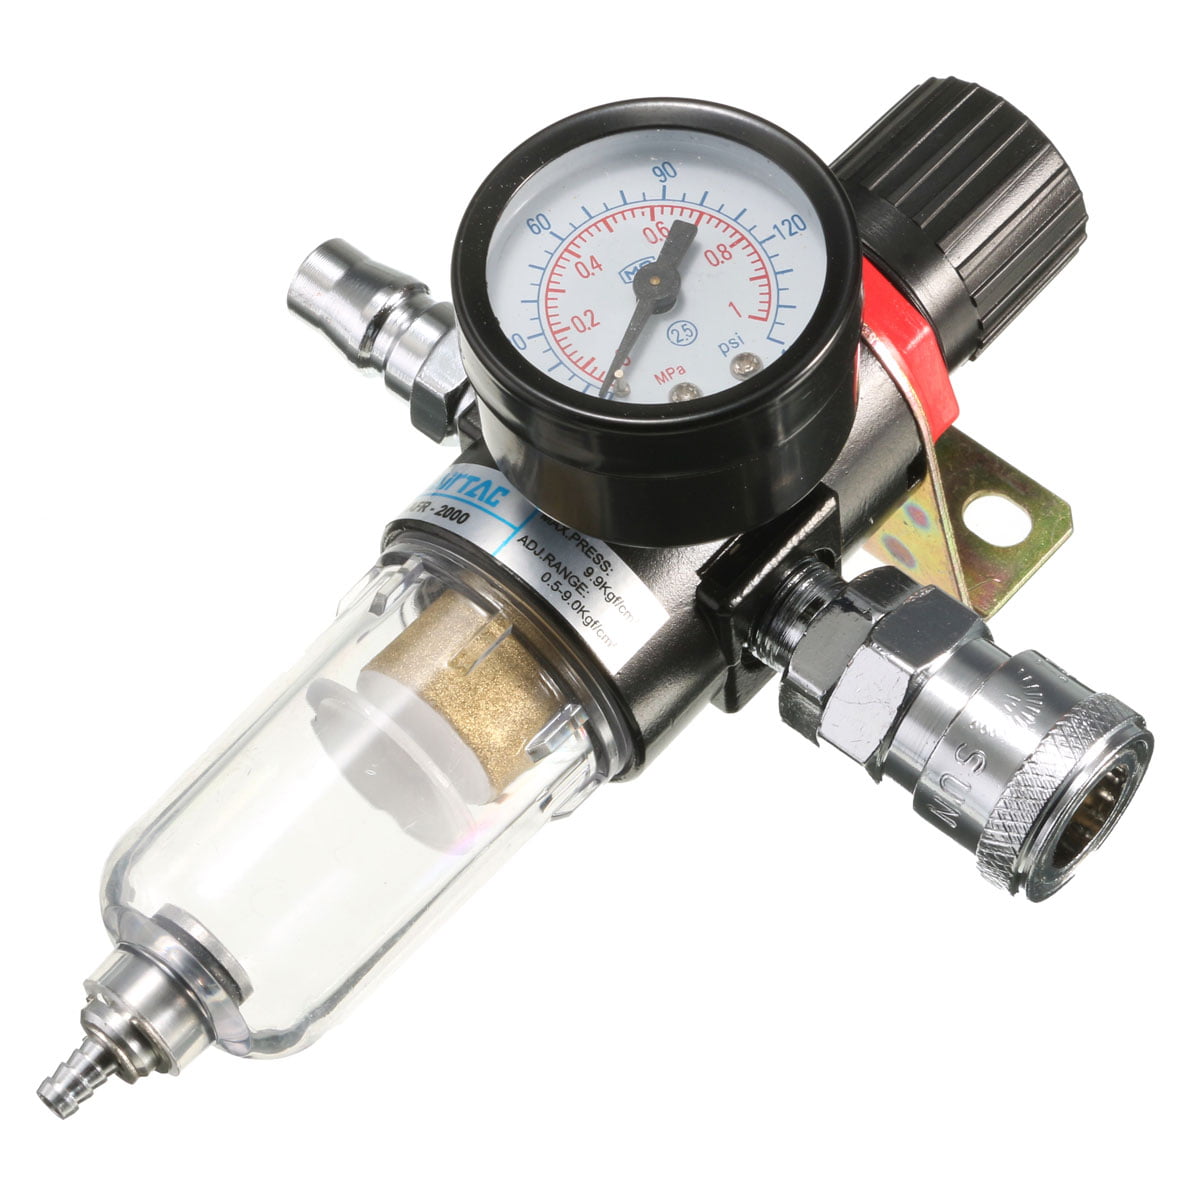 1/2"in Air Compressor Filter Oil Water Separator Trap Tools With Regulator Gauge 